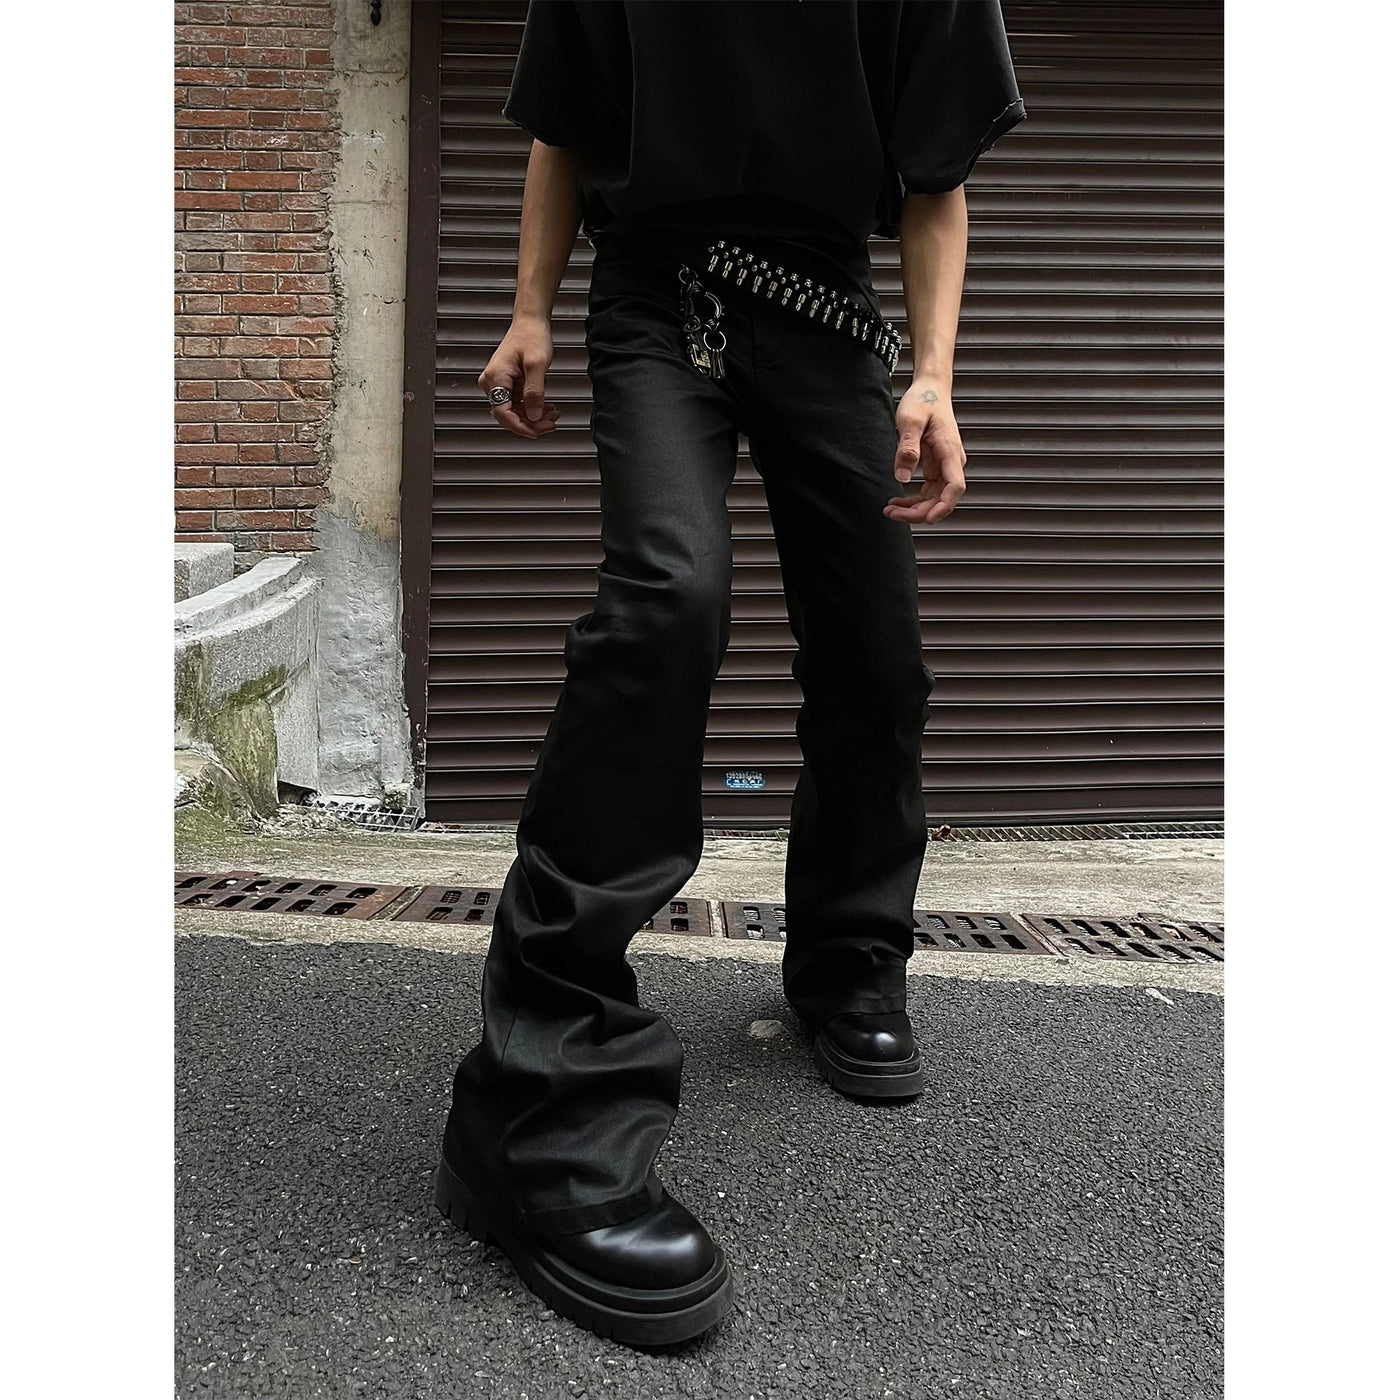 Solid Color Essential Pants Korean Street Fashion Pants By MaxDstr Shop Online at OH Vault